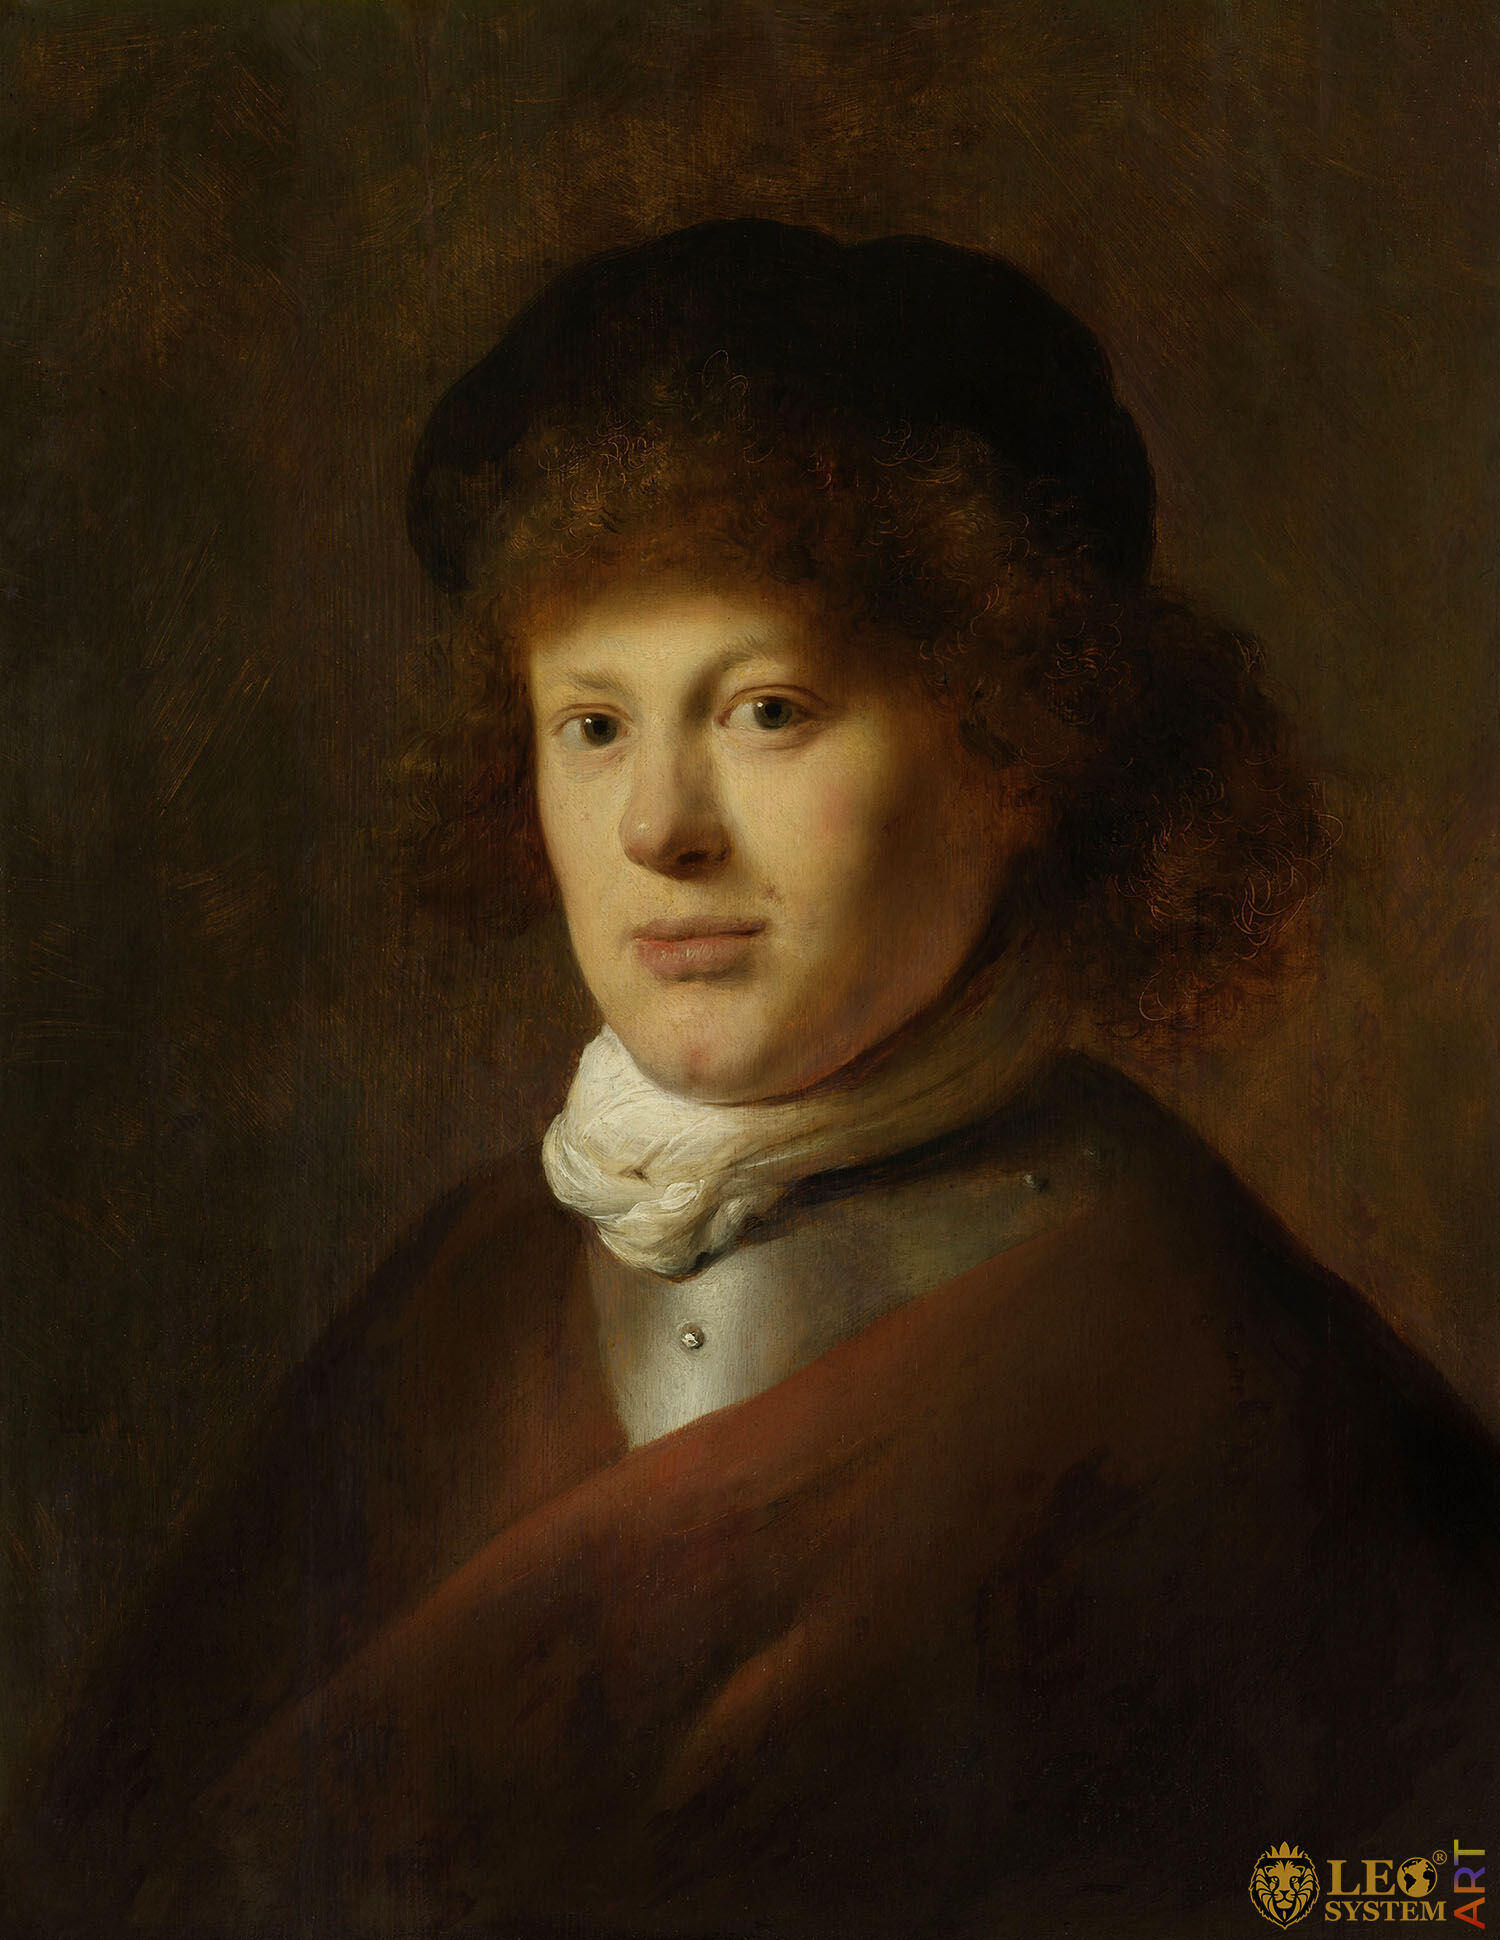 Portrait of Rembrandt van Rijn, Painter: Jan Lievens, 1628, Amsterdam, Netherlands, Original painting